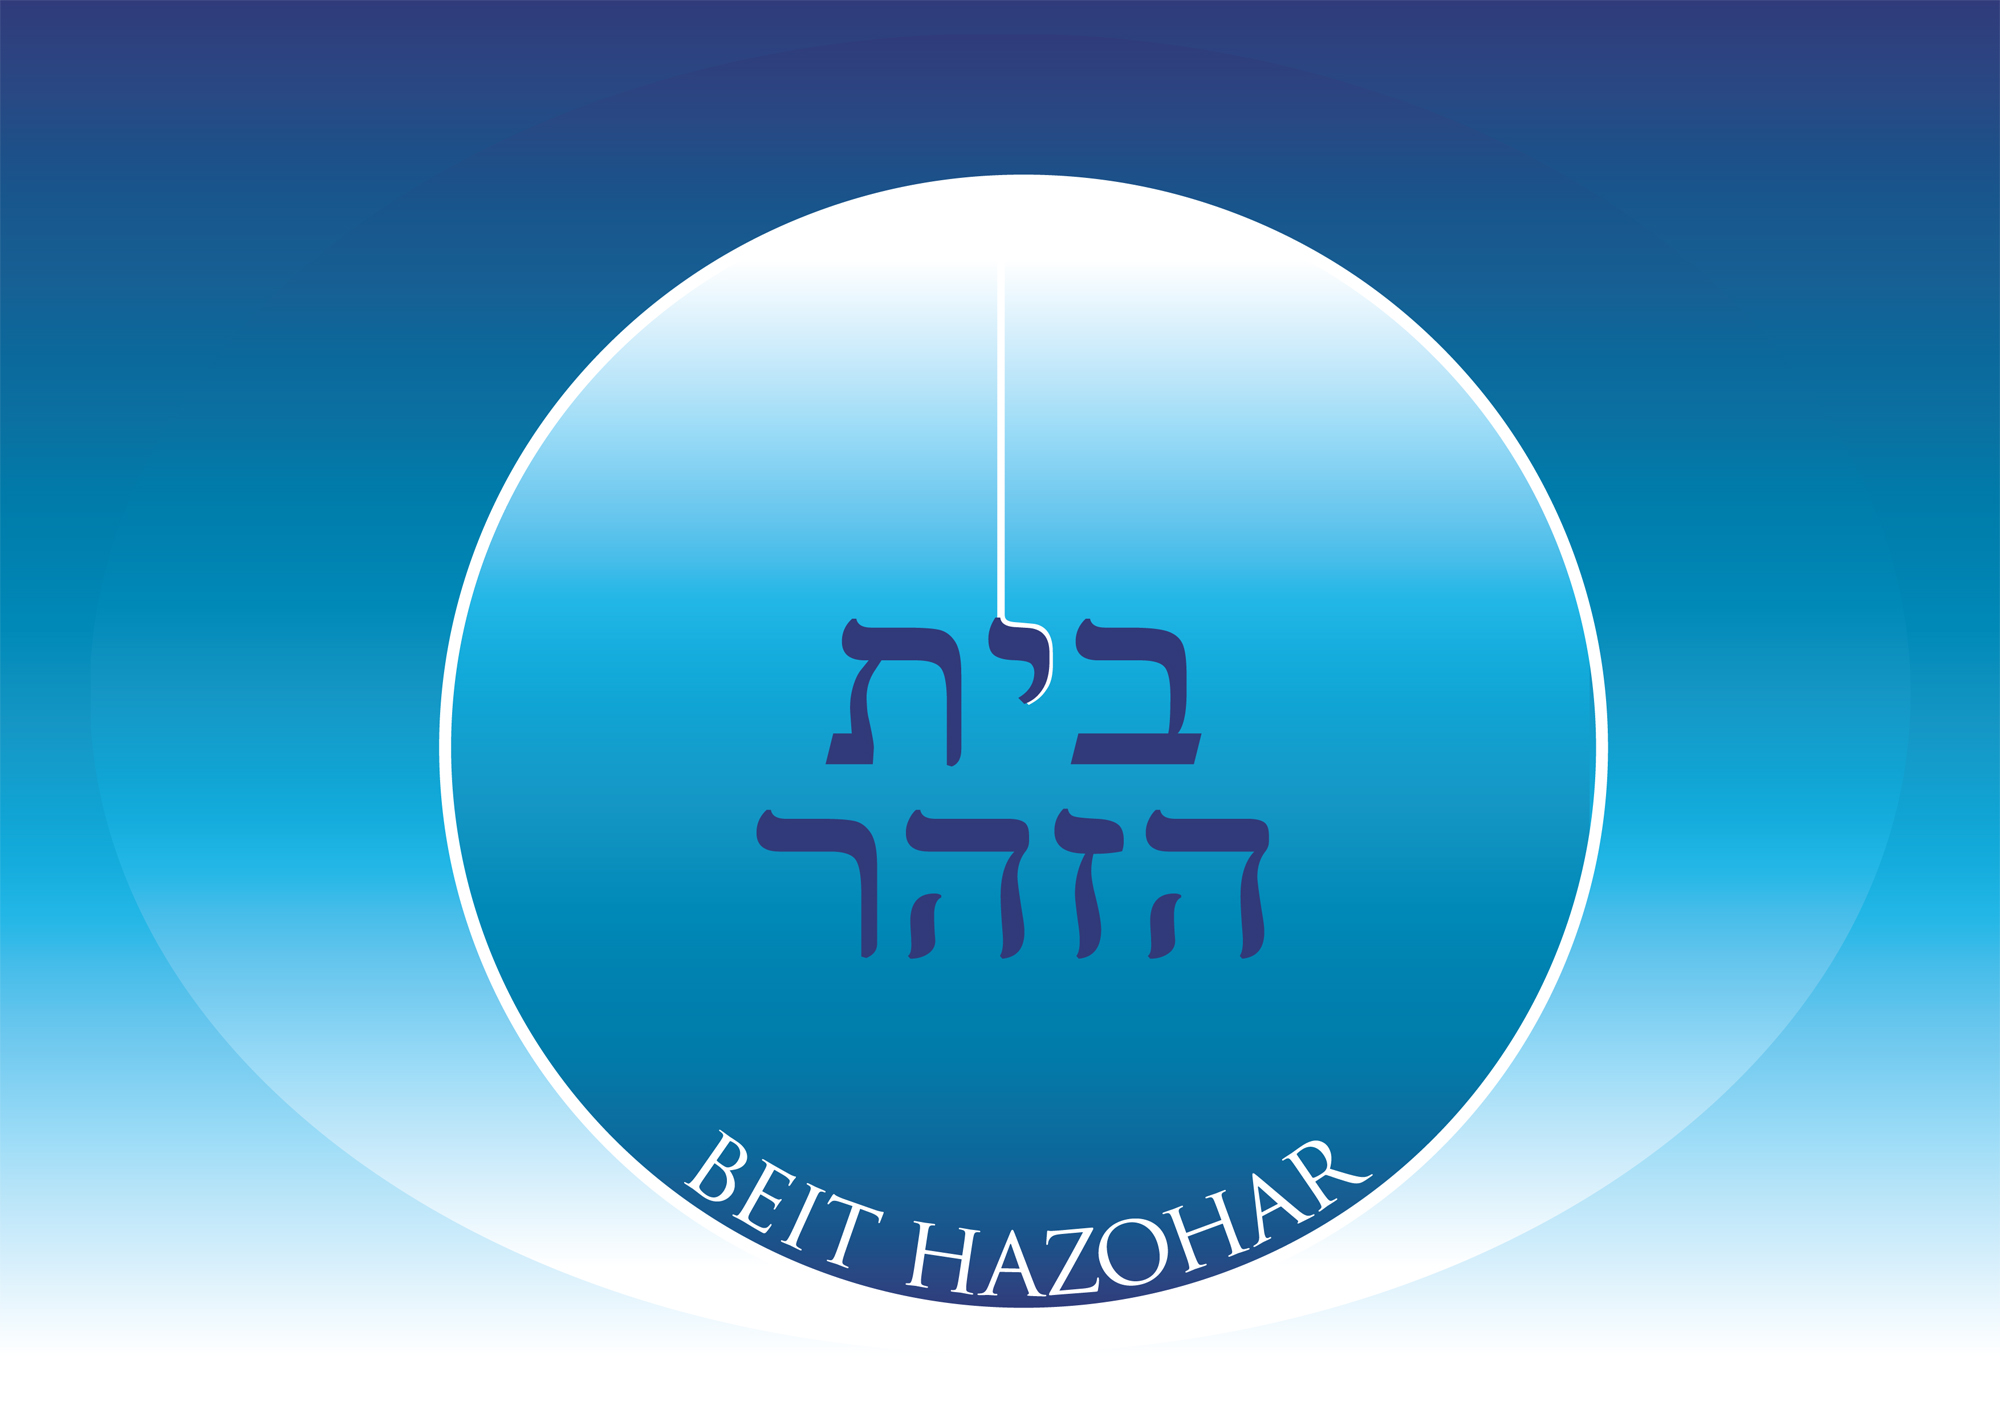 Beit Hazohar logo